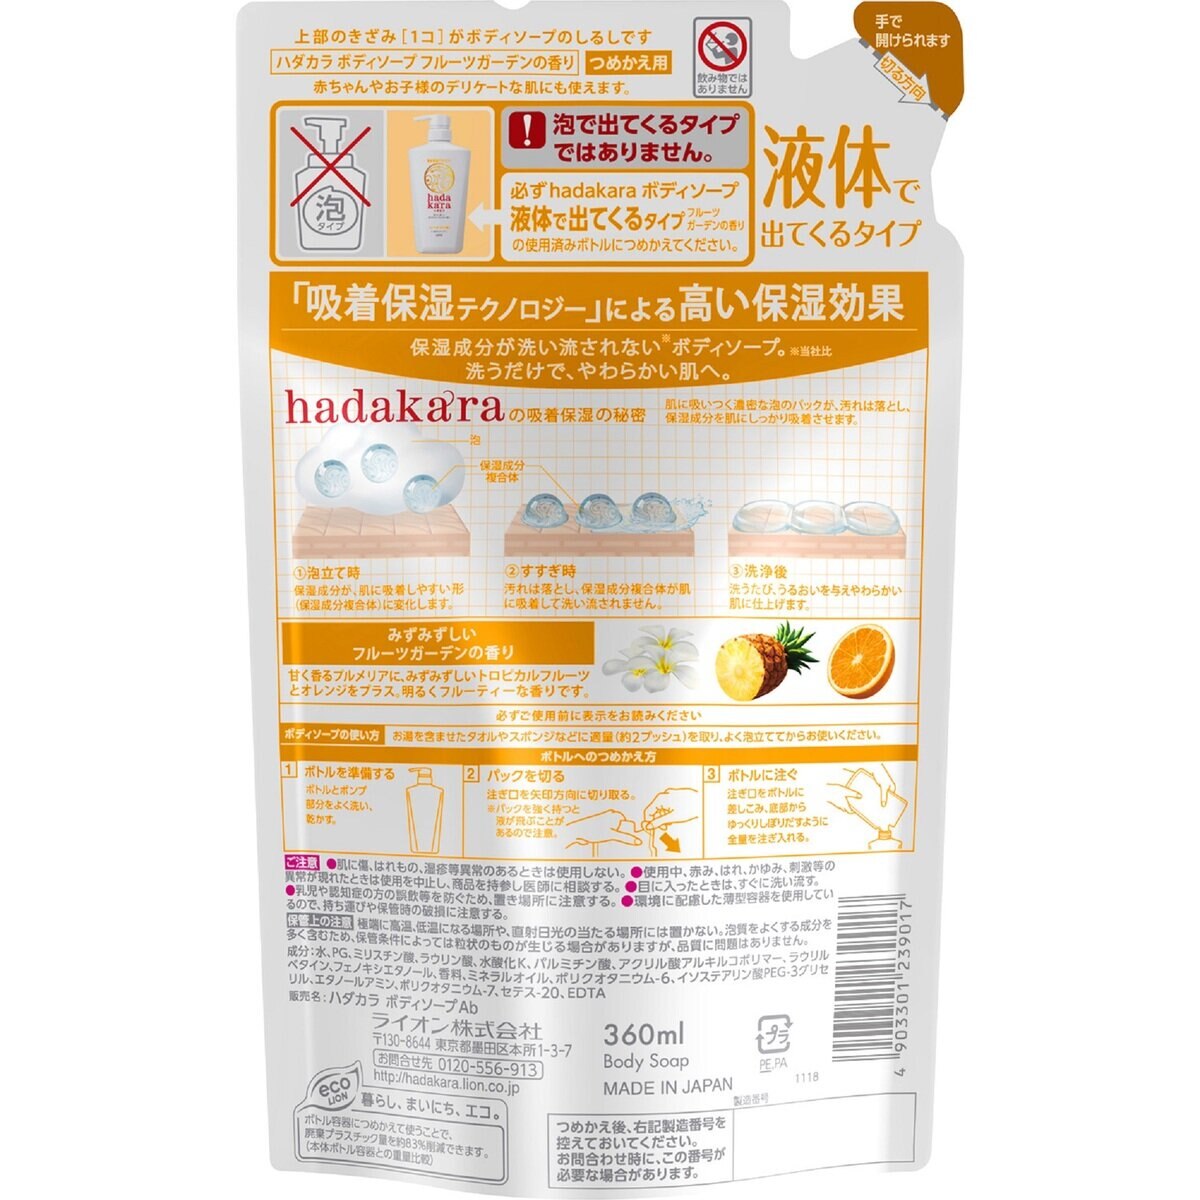 hadakara(ハダカラ) ボディソープ フルーツガーデンの香り 詰替 360ml  x 16個入り (ケース販売）